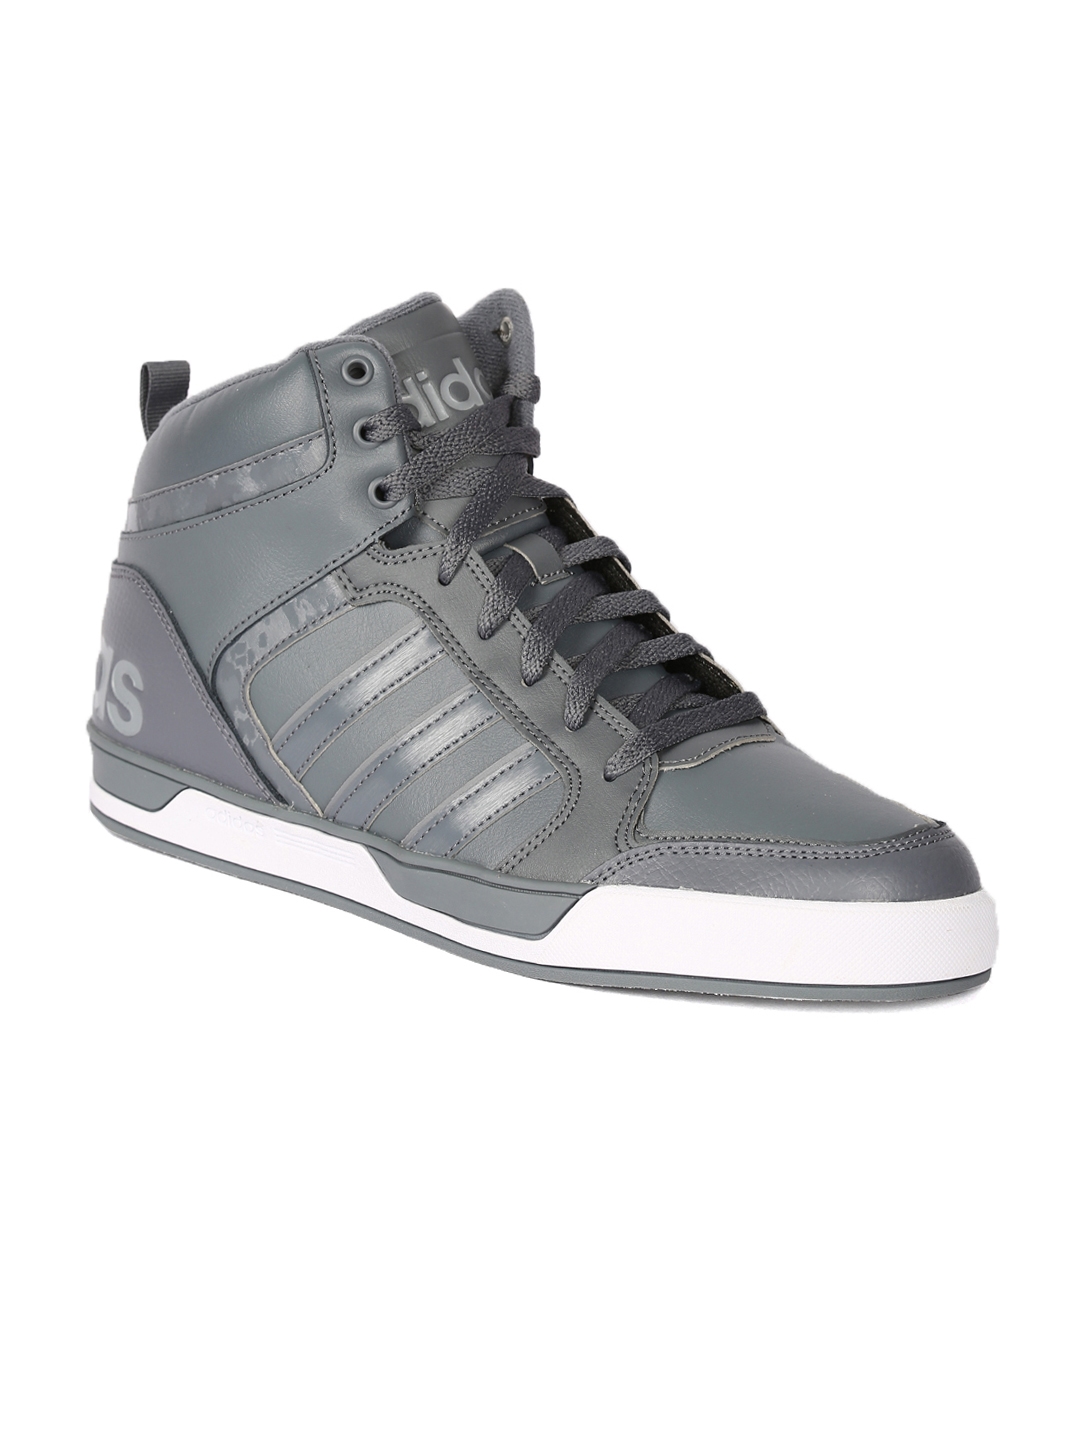 Buy ADIDAS NEO Men Grey High Top Sneakers - Casual for Men 1501335 | Myntra